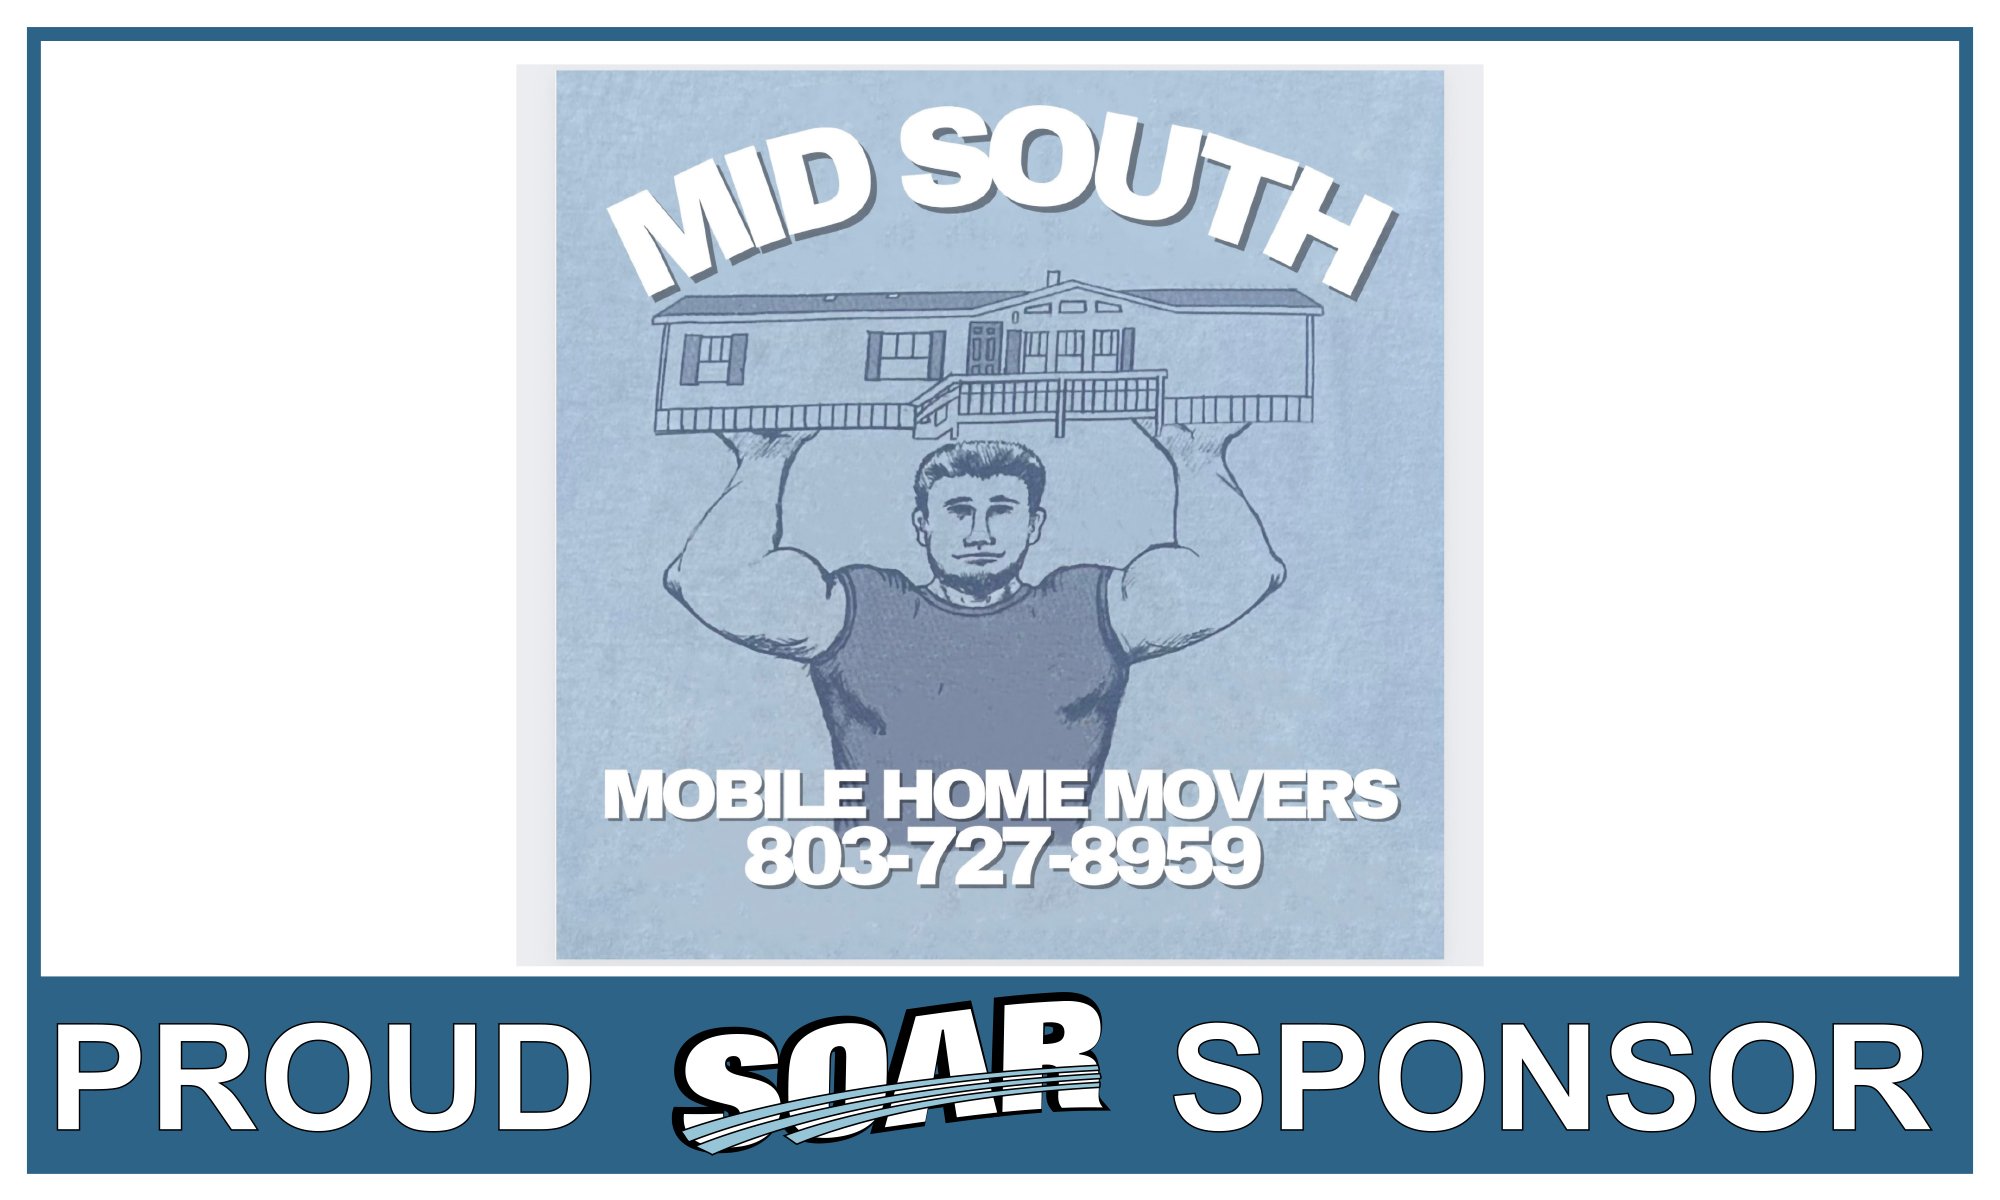 Mid South mobile home movers sponsor banner.jpg